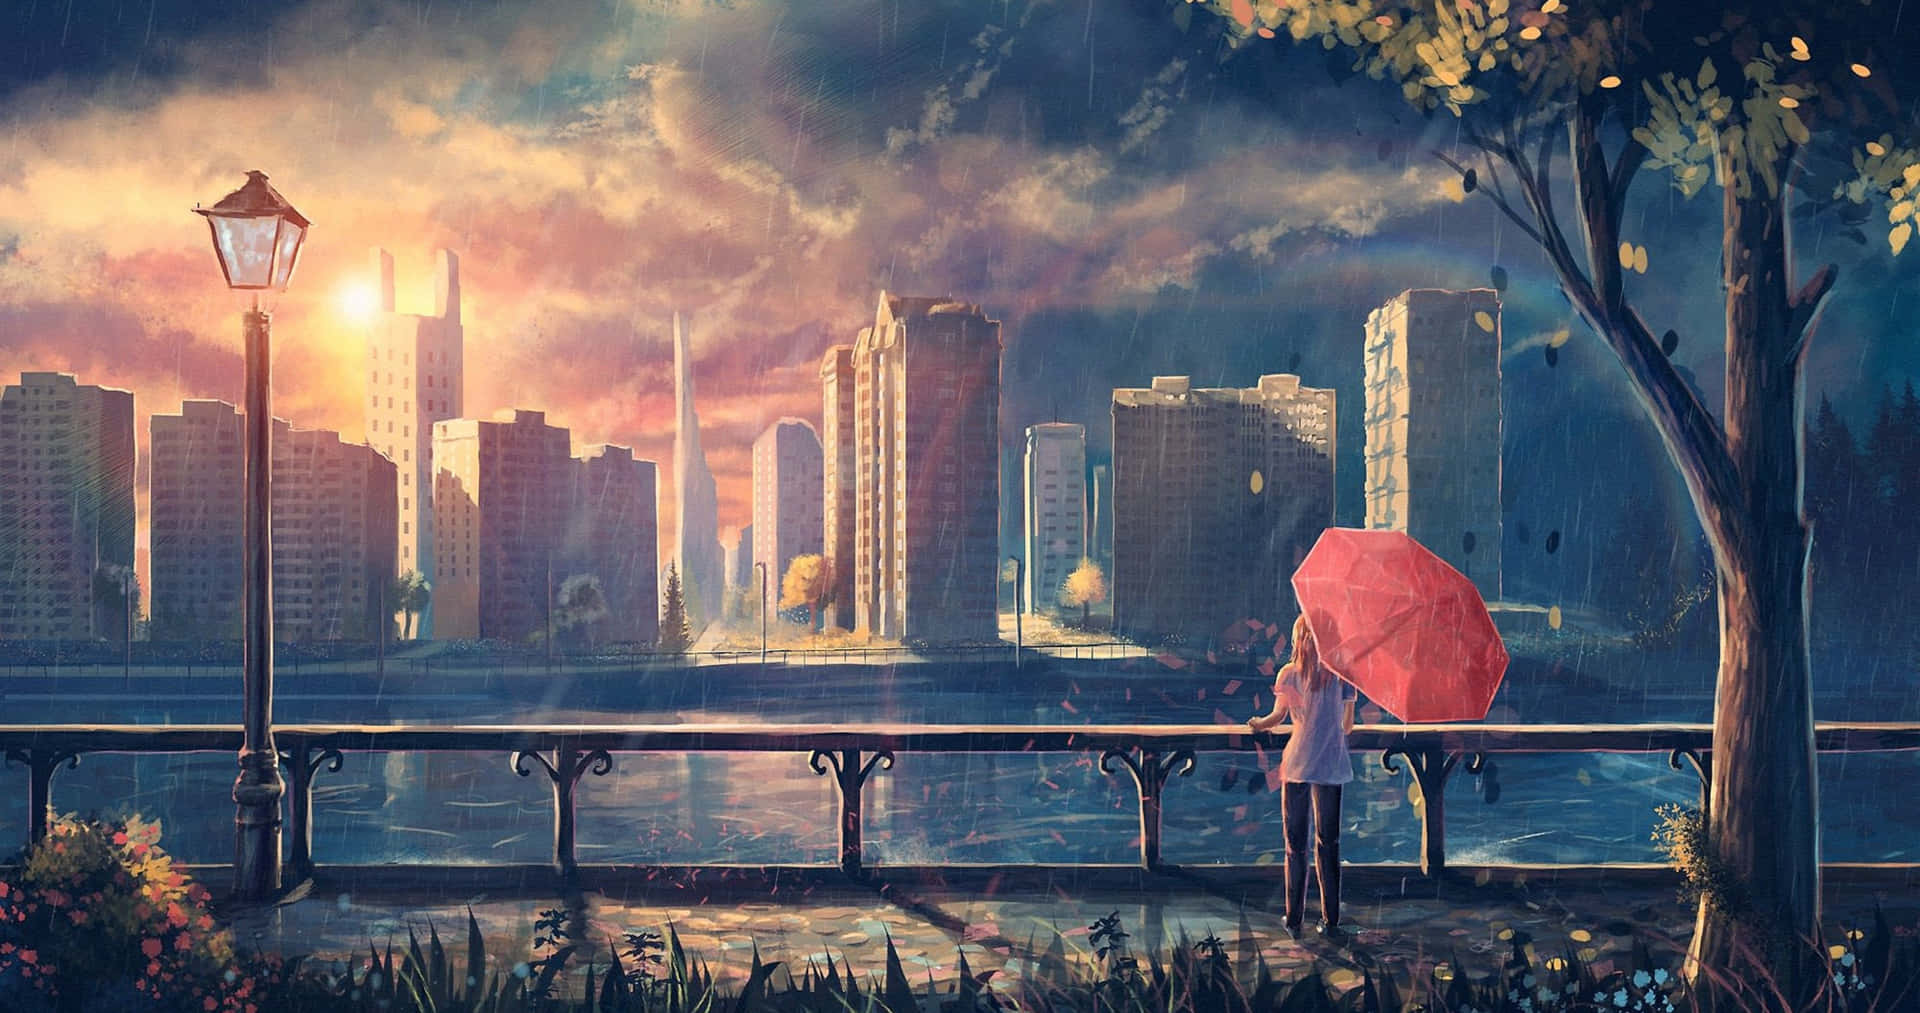 iPhone11papers.com | iPhone11 wallpaper |  ao63-my-neighbor-totoro-art-illust-rain-anime